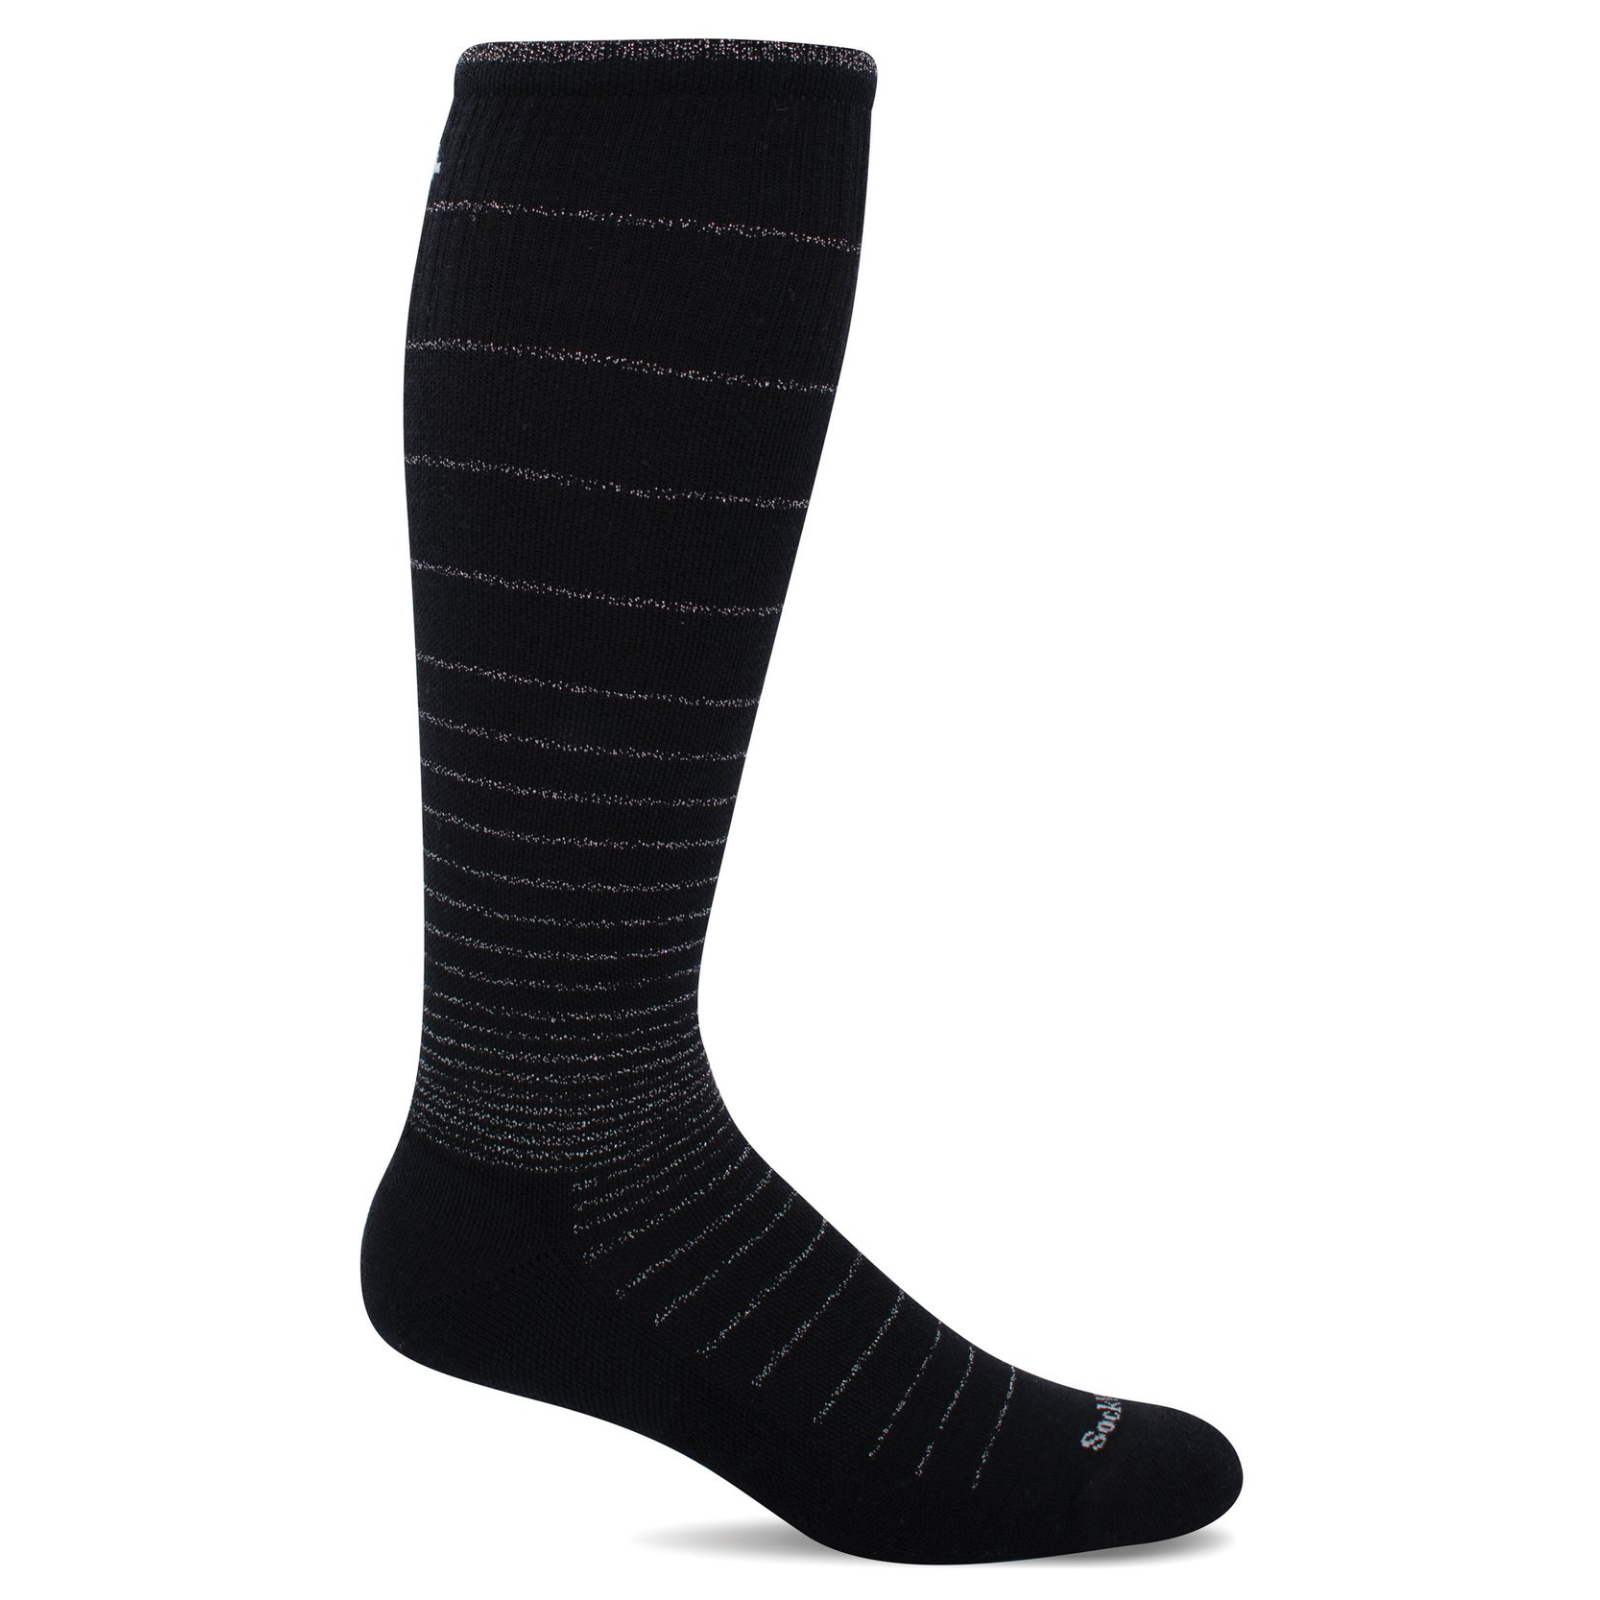 Sockwell Circulator moderate graduated compression (15-20 mmHg) knee high women's sock in black sparkle